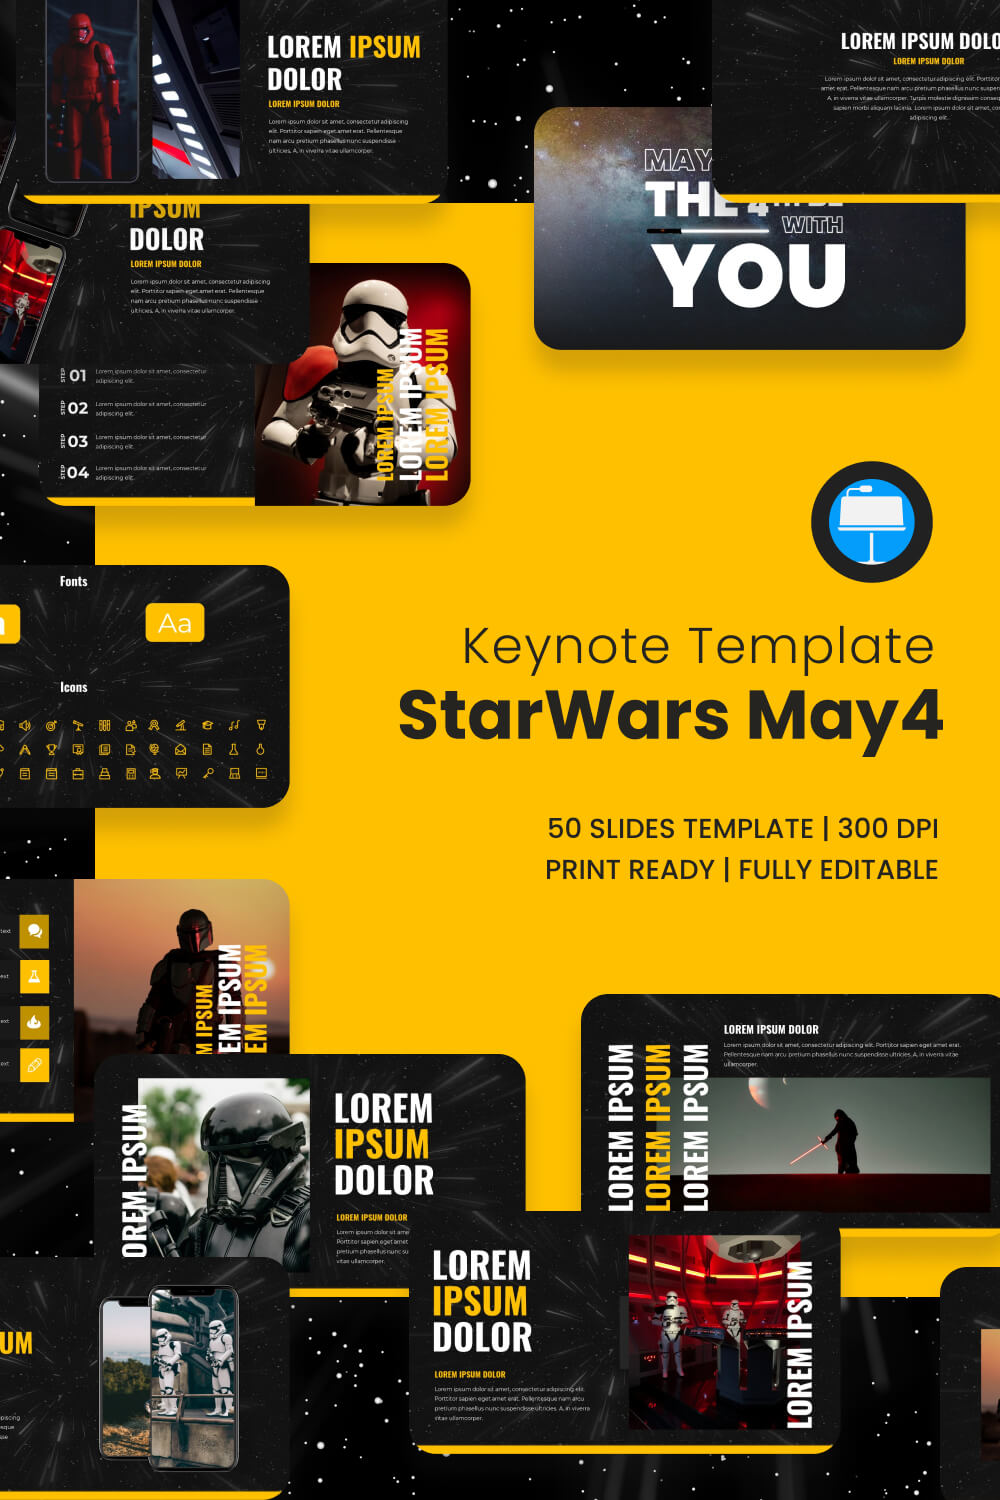 May4th Star Wars Keynote Template pinterest image.